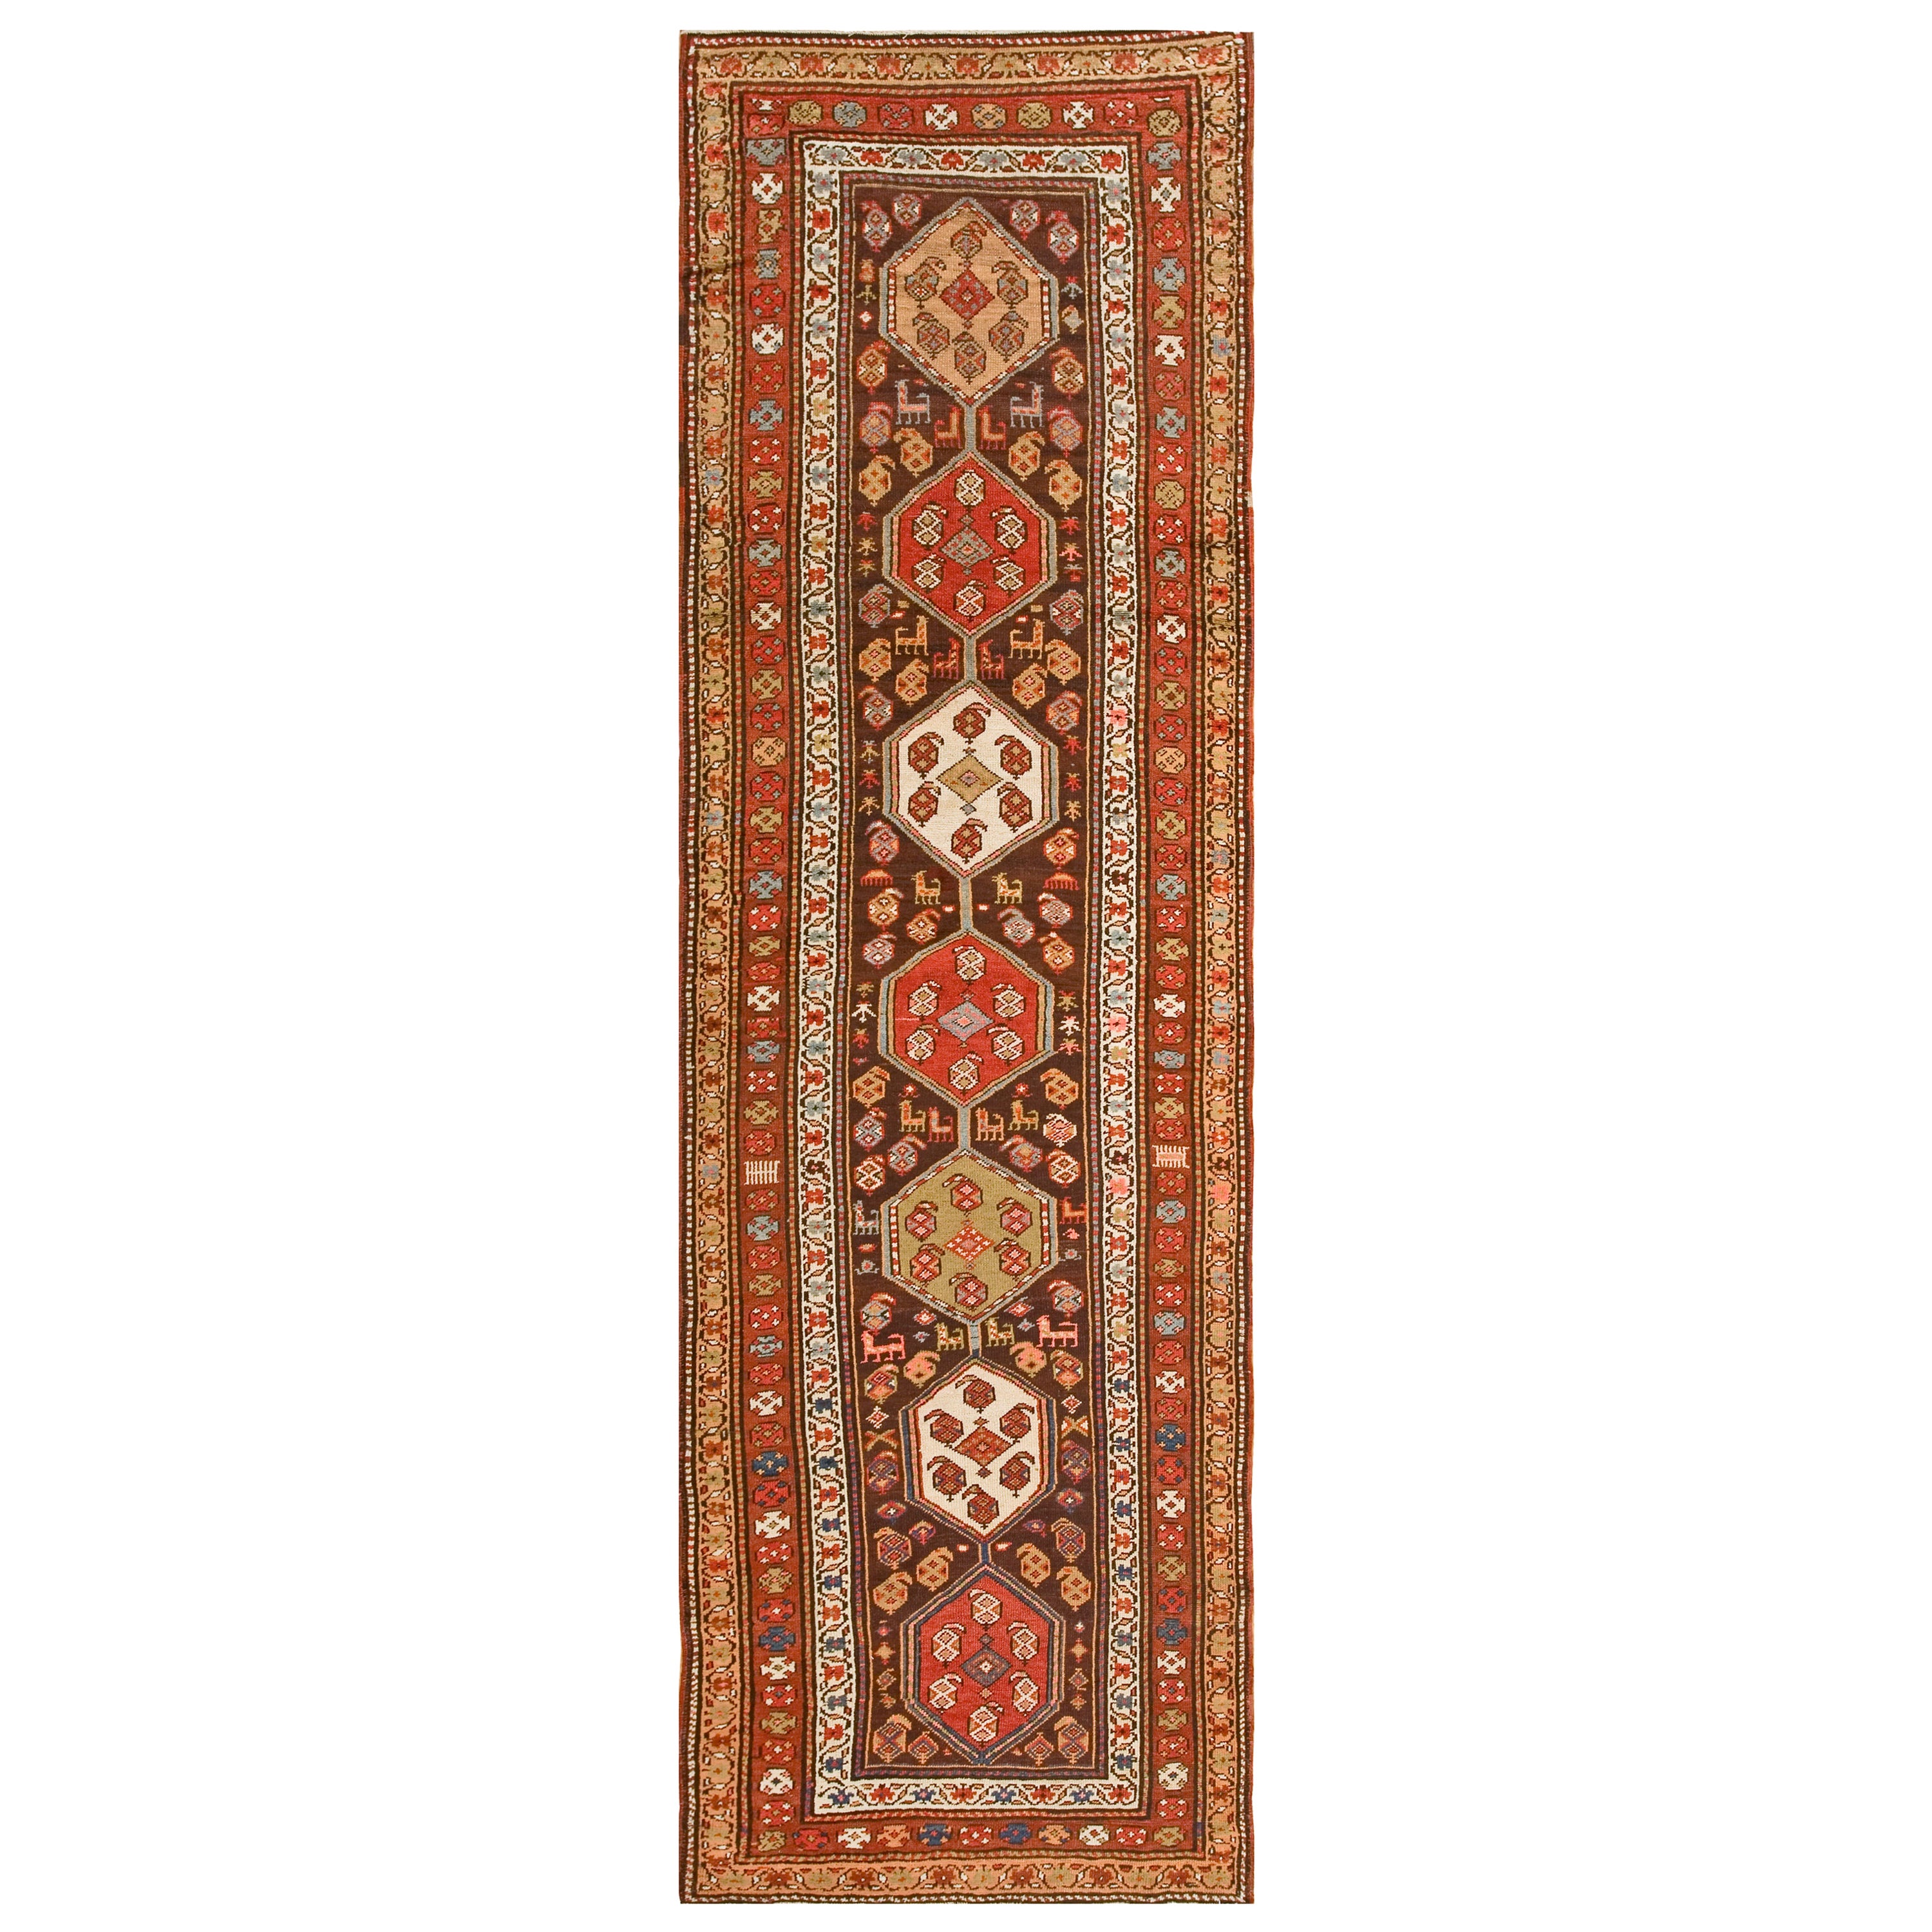 Early 20th Century W. Persian Kurdish Runner Carpet (3'10" x 13'2" - 117 x 401) For Sale